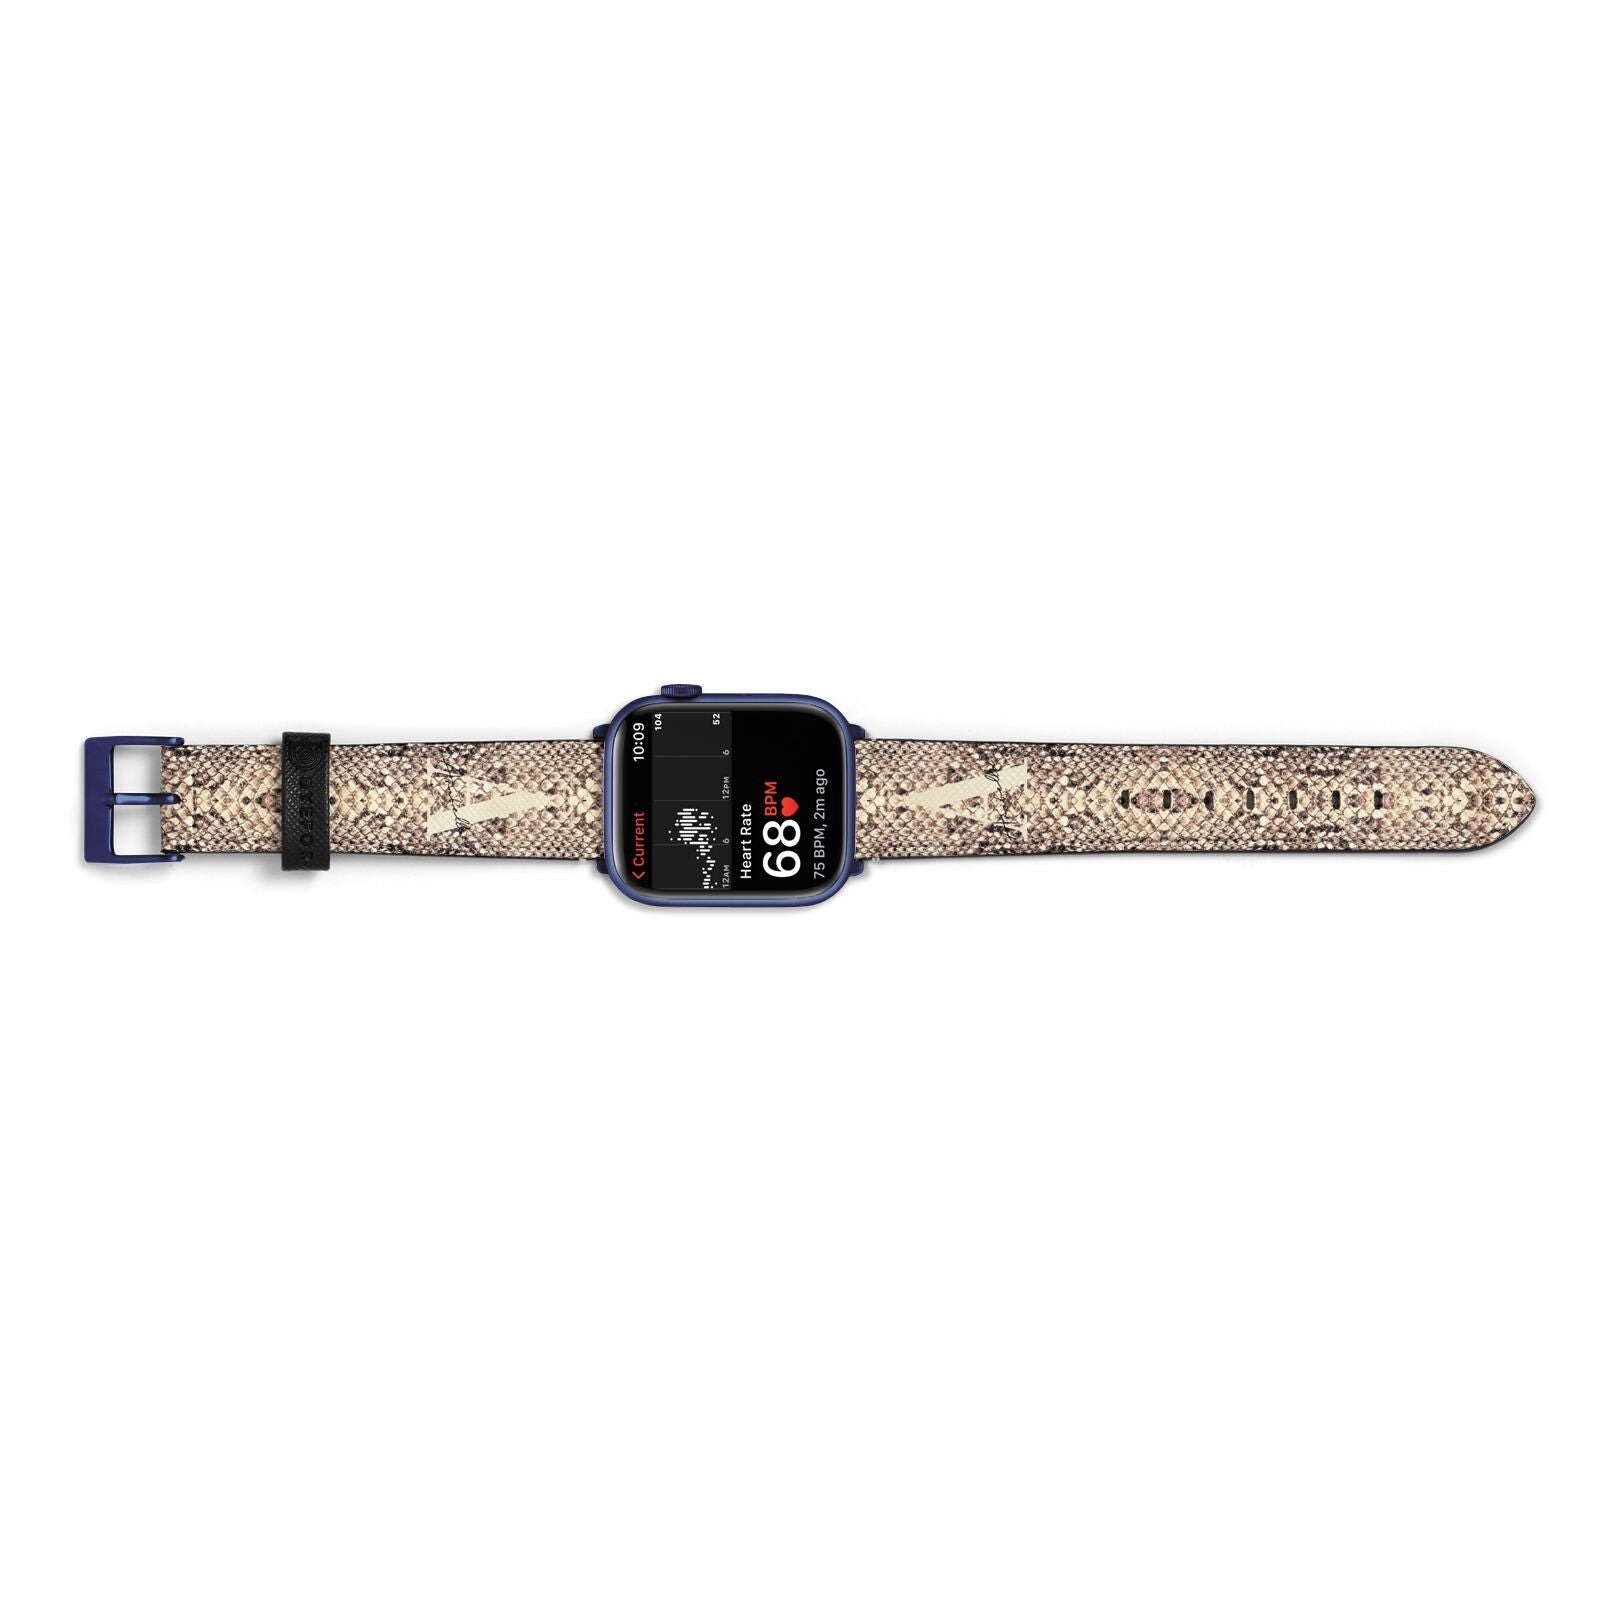 Personalised Snake Skin Effect Apple Watch Strap Size 38mm Landscape Image Blue Hardware